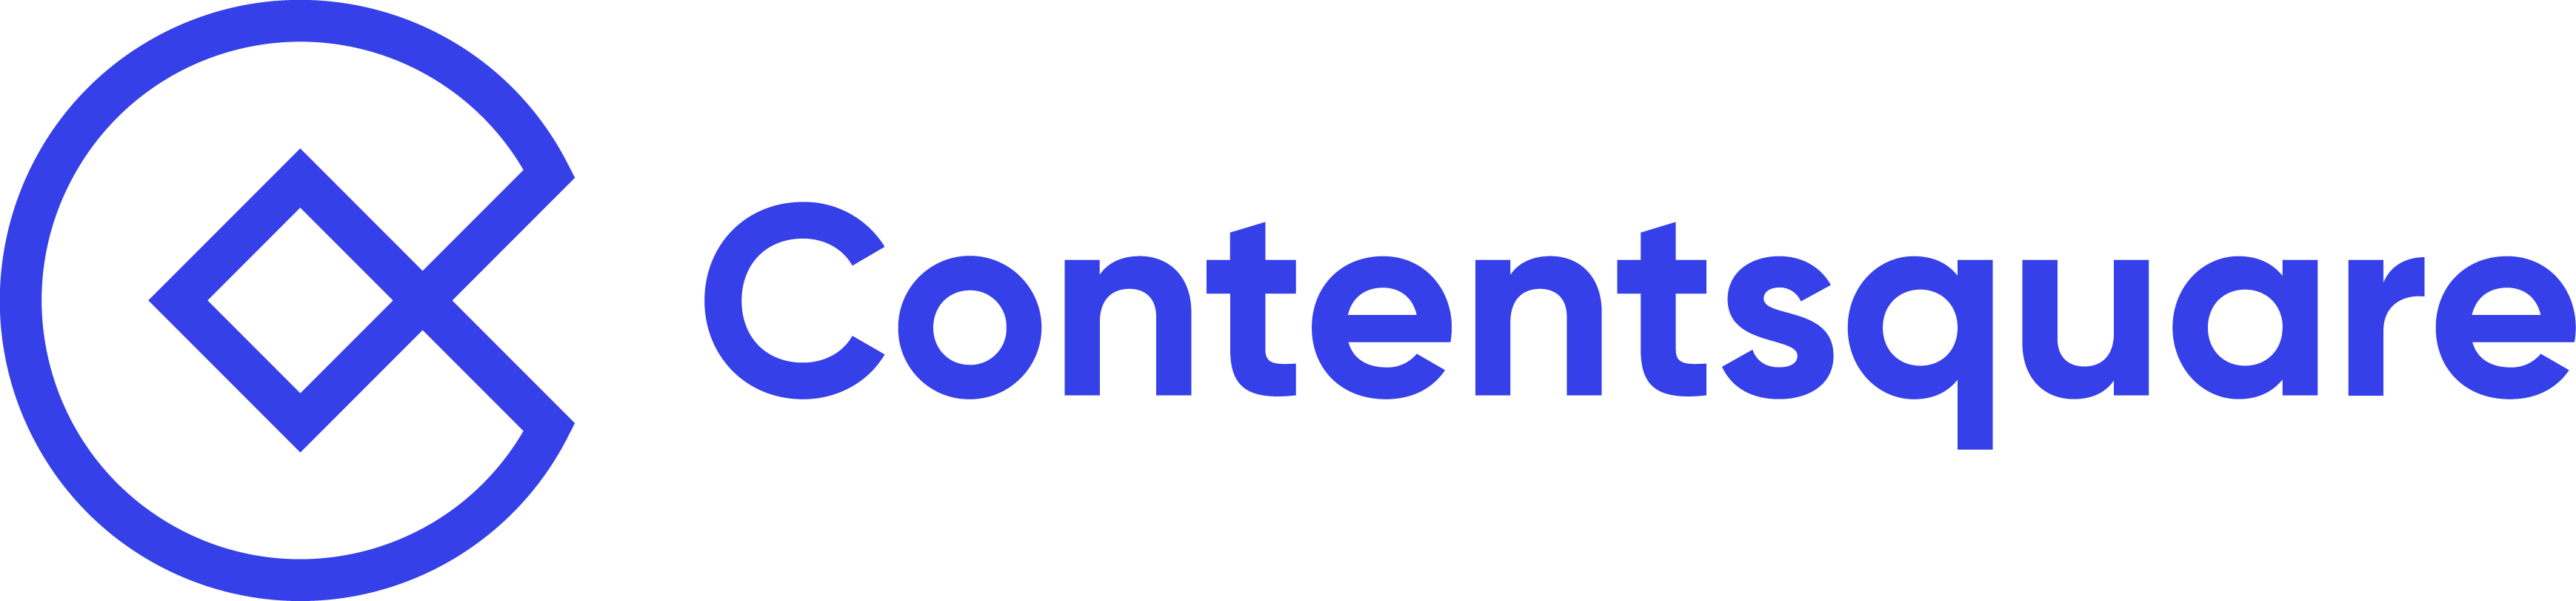 Vision Fund investment portfolio company Contentsquare's logo